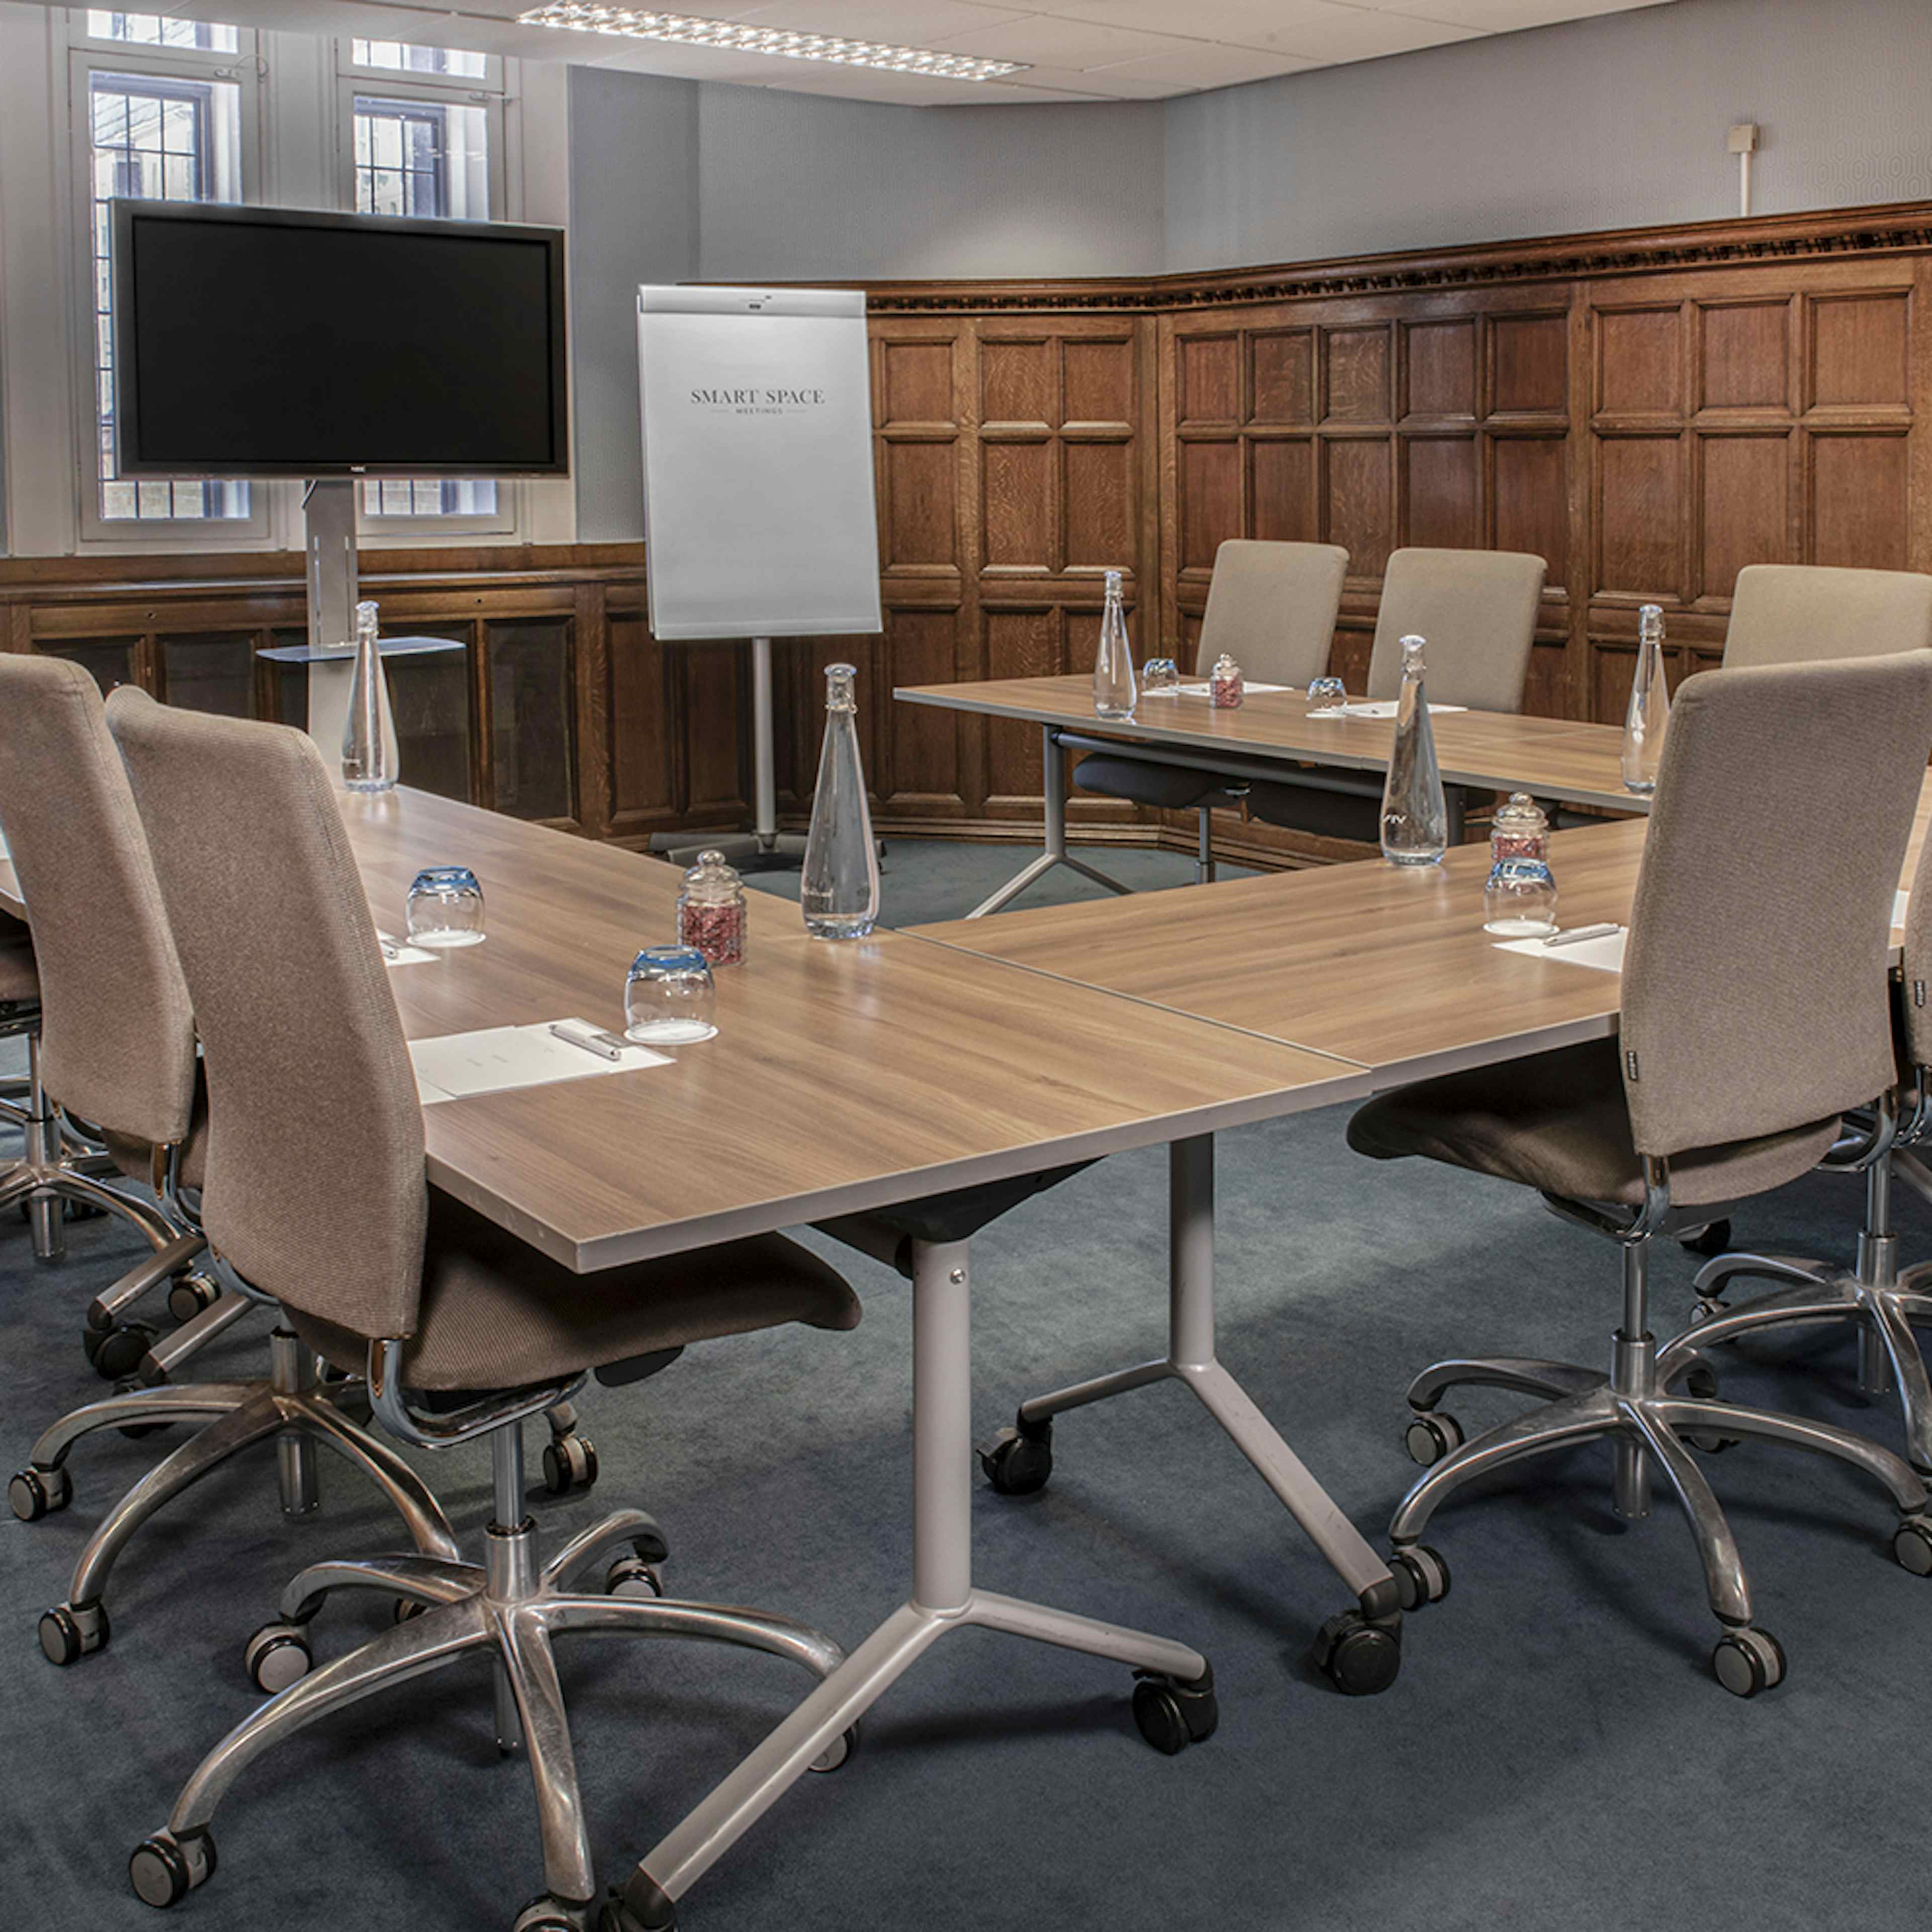 De Vere Holborn Bars - Medium Sized Meeting Room image 3